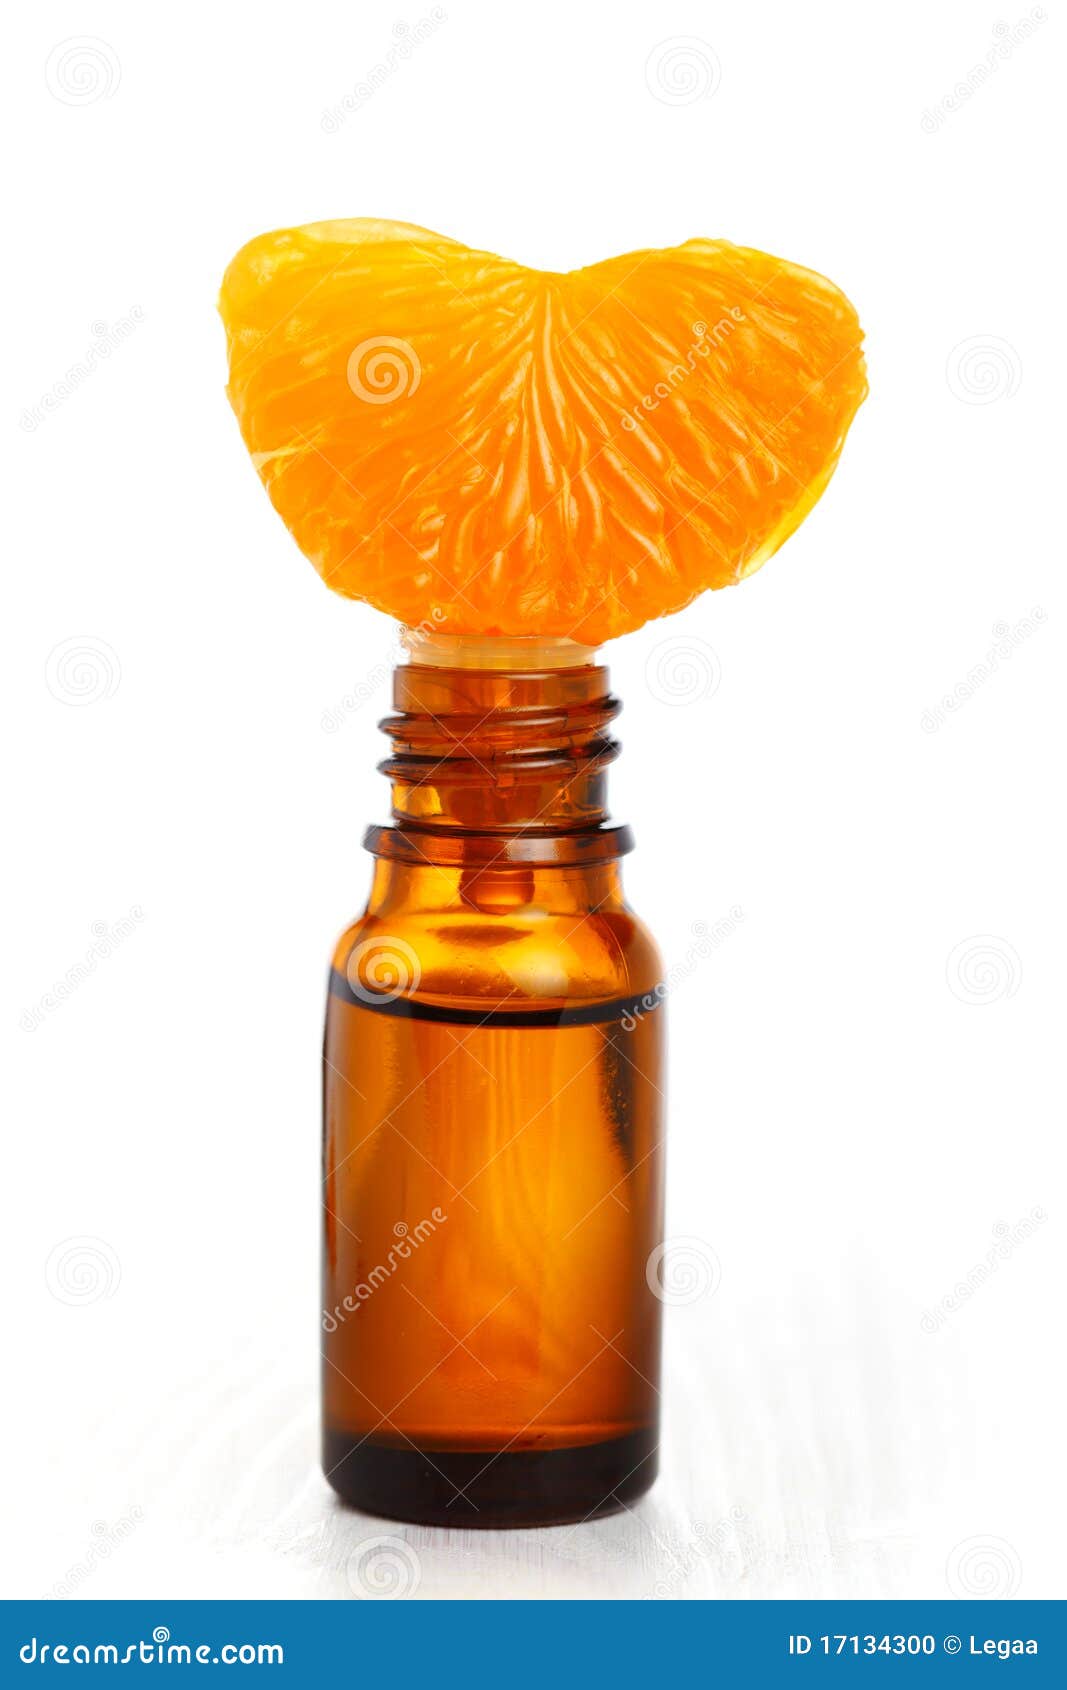 aromatic essence oil and fresh orange segment